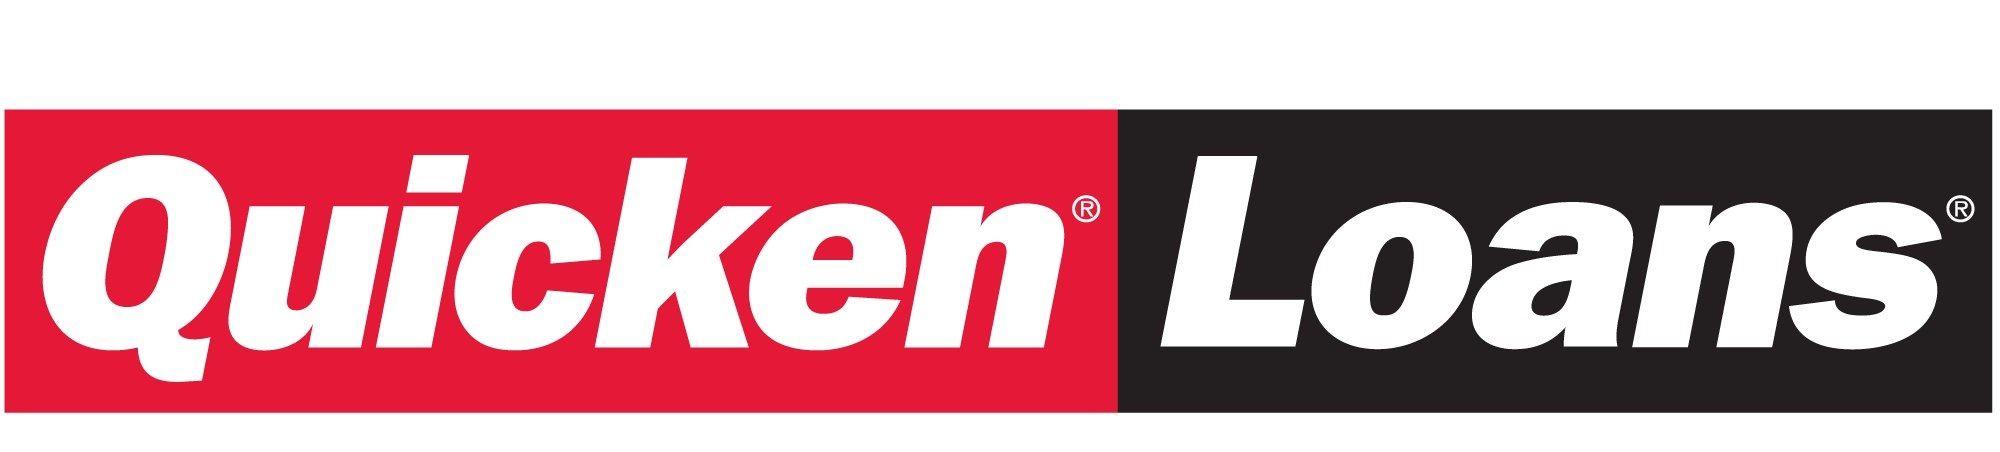 Quicken Loans Logo - Quicken Logos